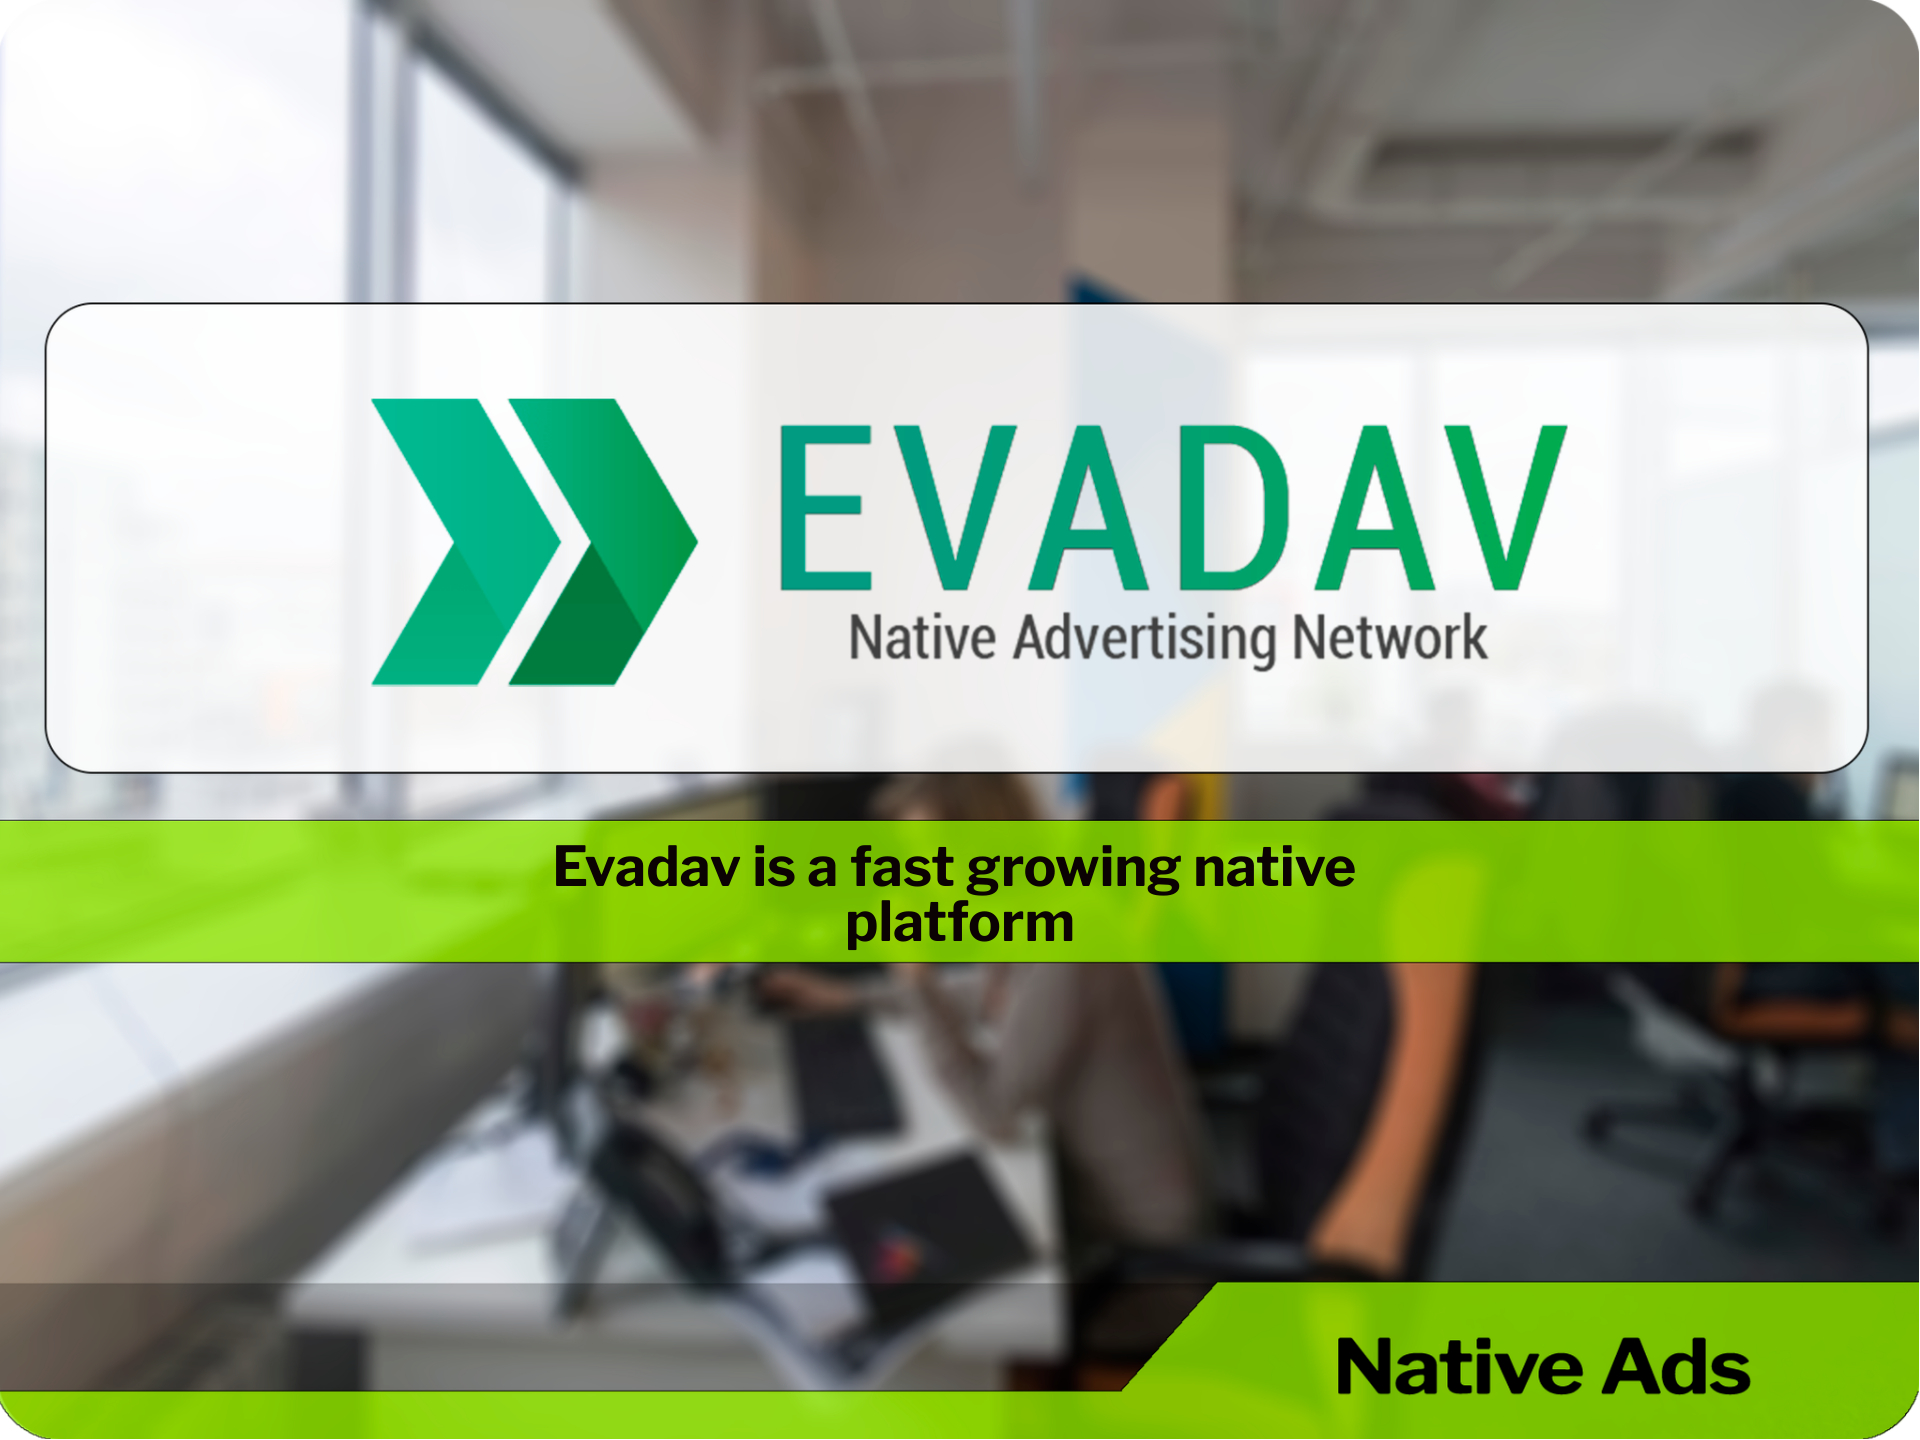 Evadav is a fast growing native platform